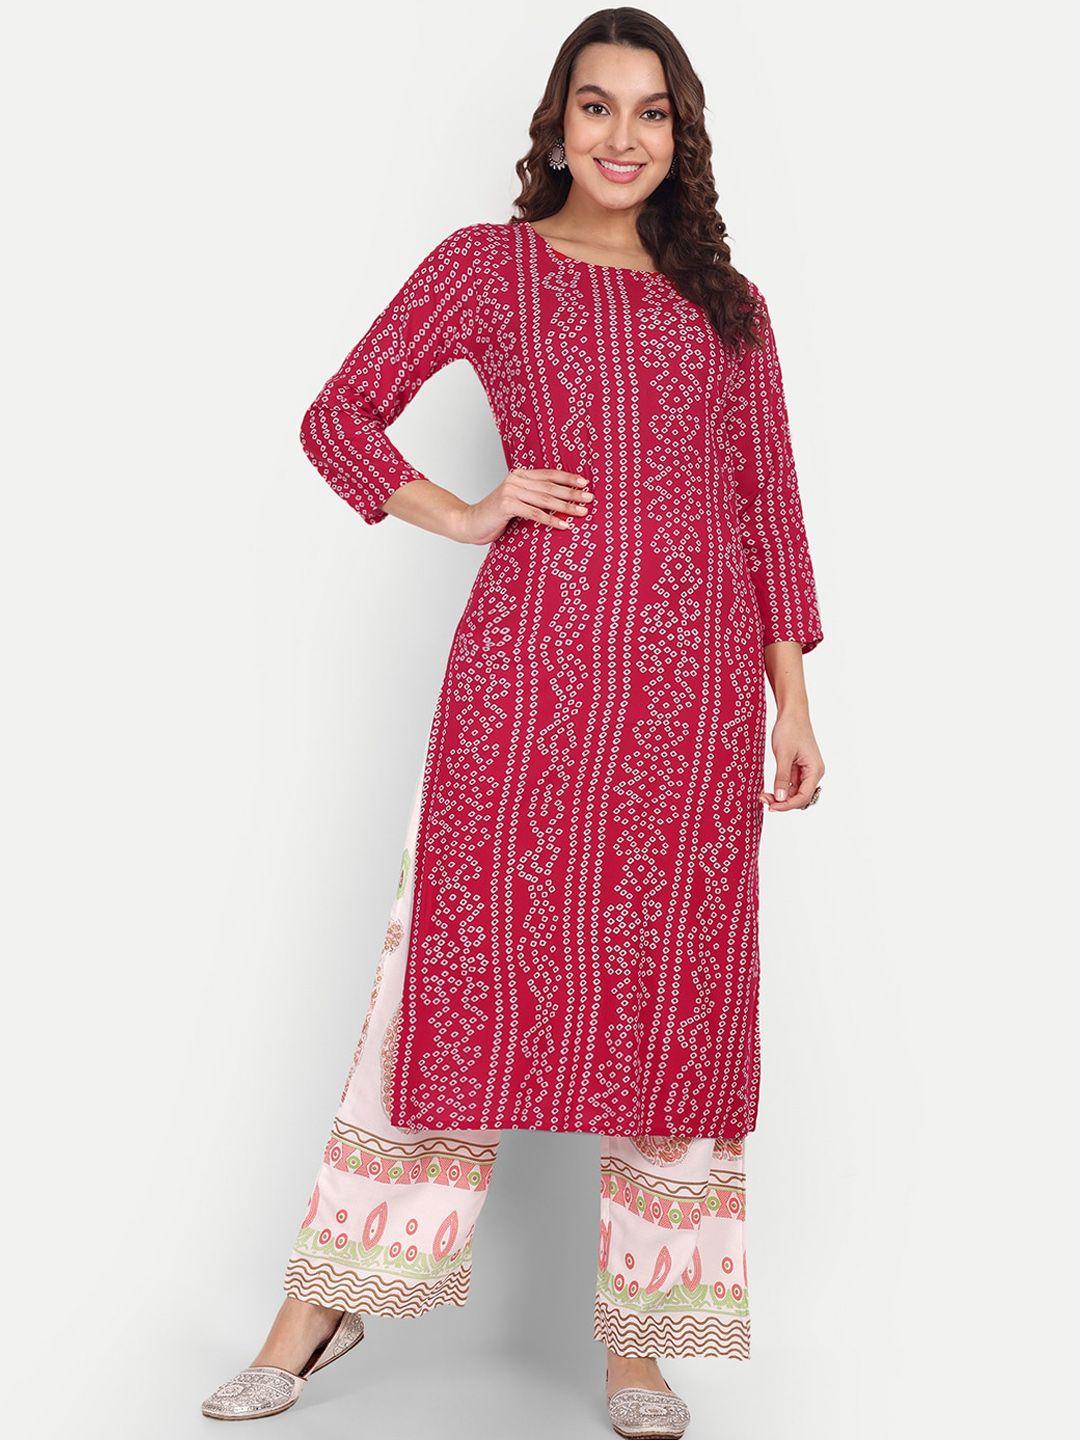 aarti fashion ethnic motifs printed round neck pure cotton kurta with palazzos